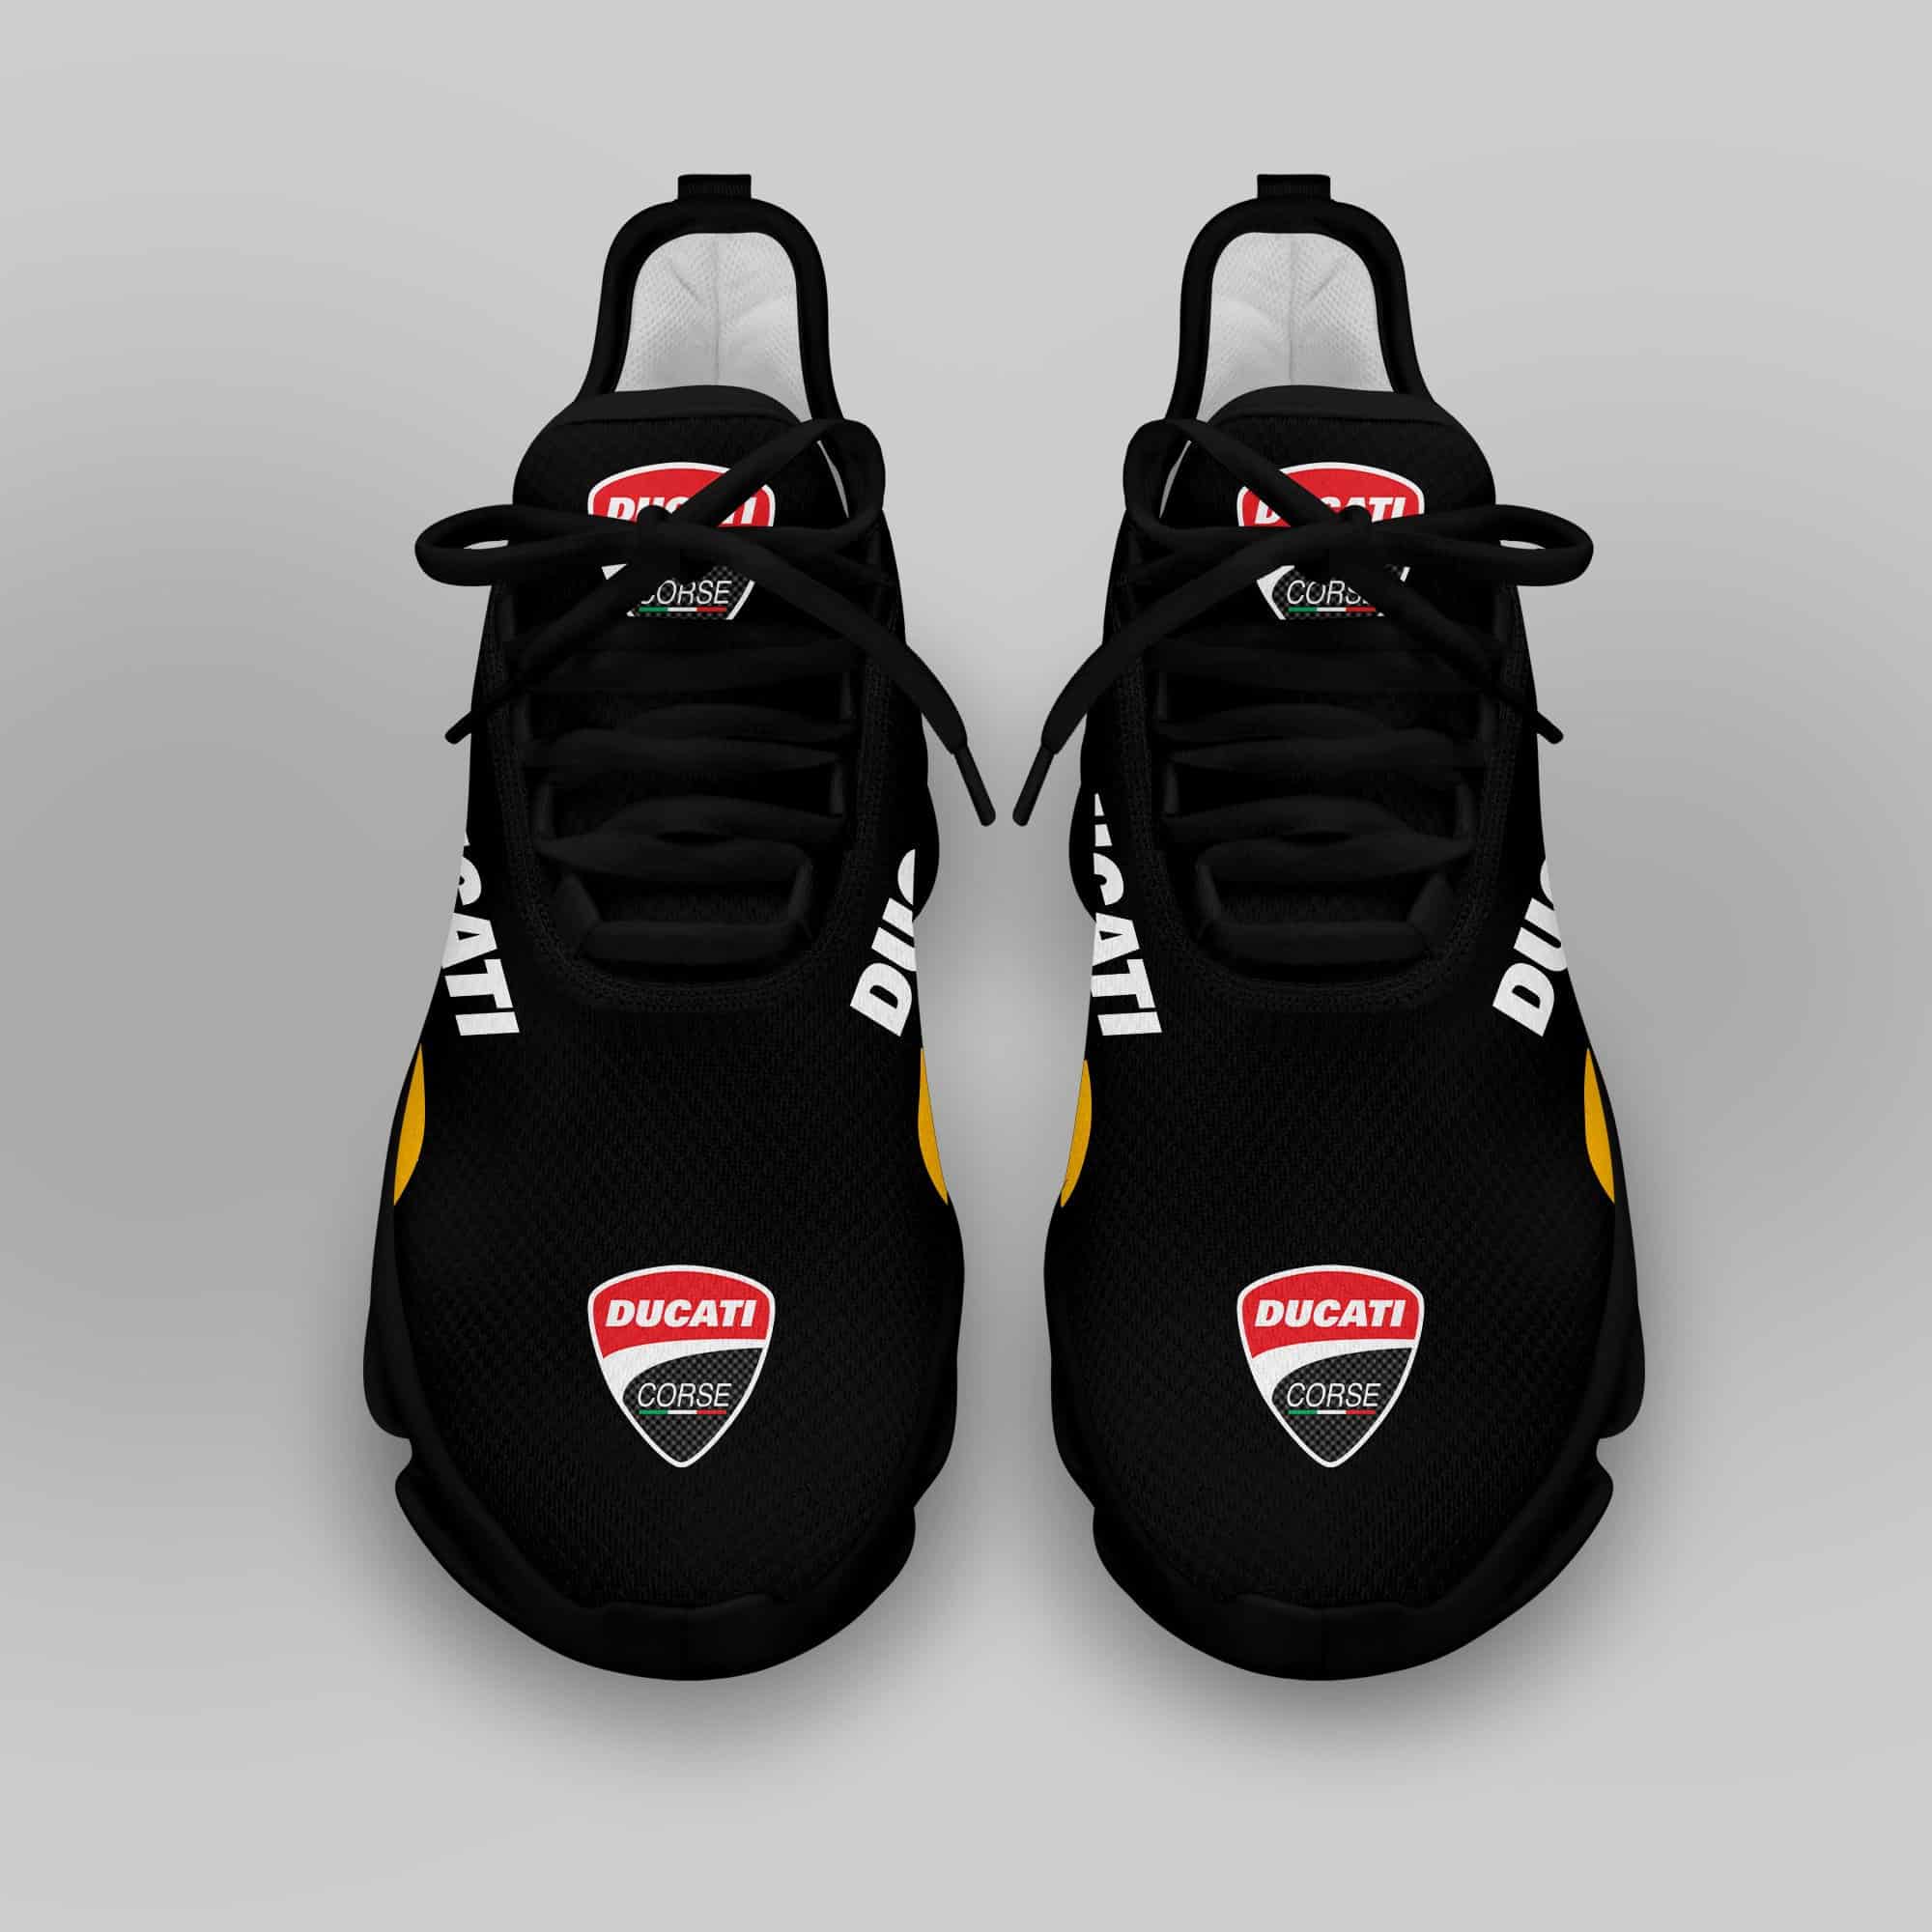 Ducati Racing Running Shoes Max Soul Shoes Sneakers Ver 60 4